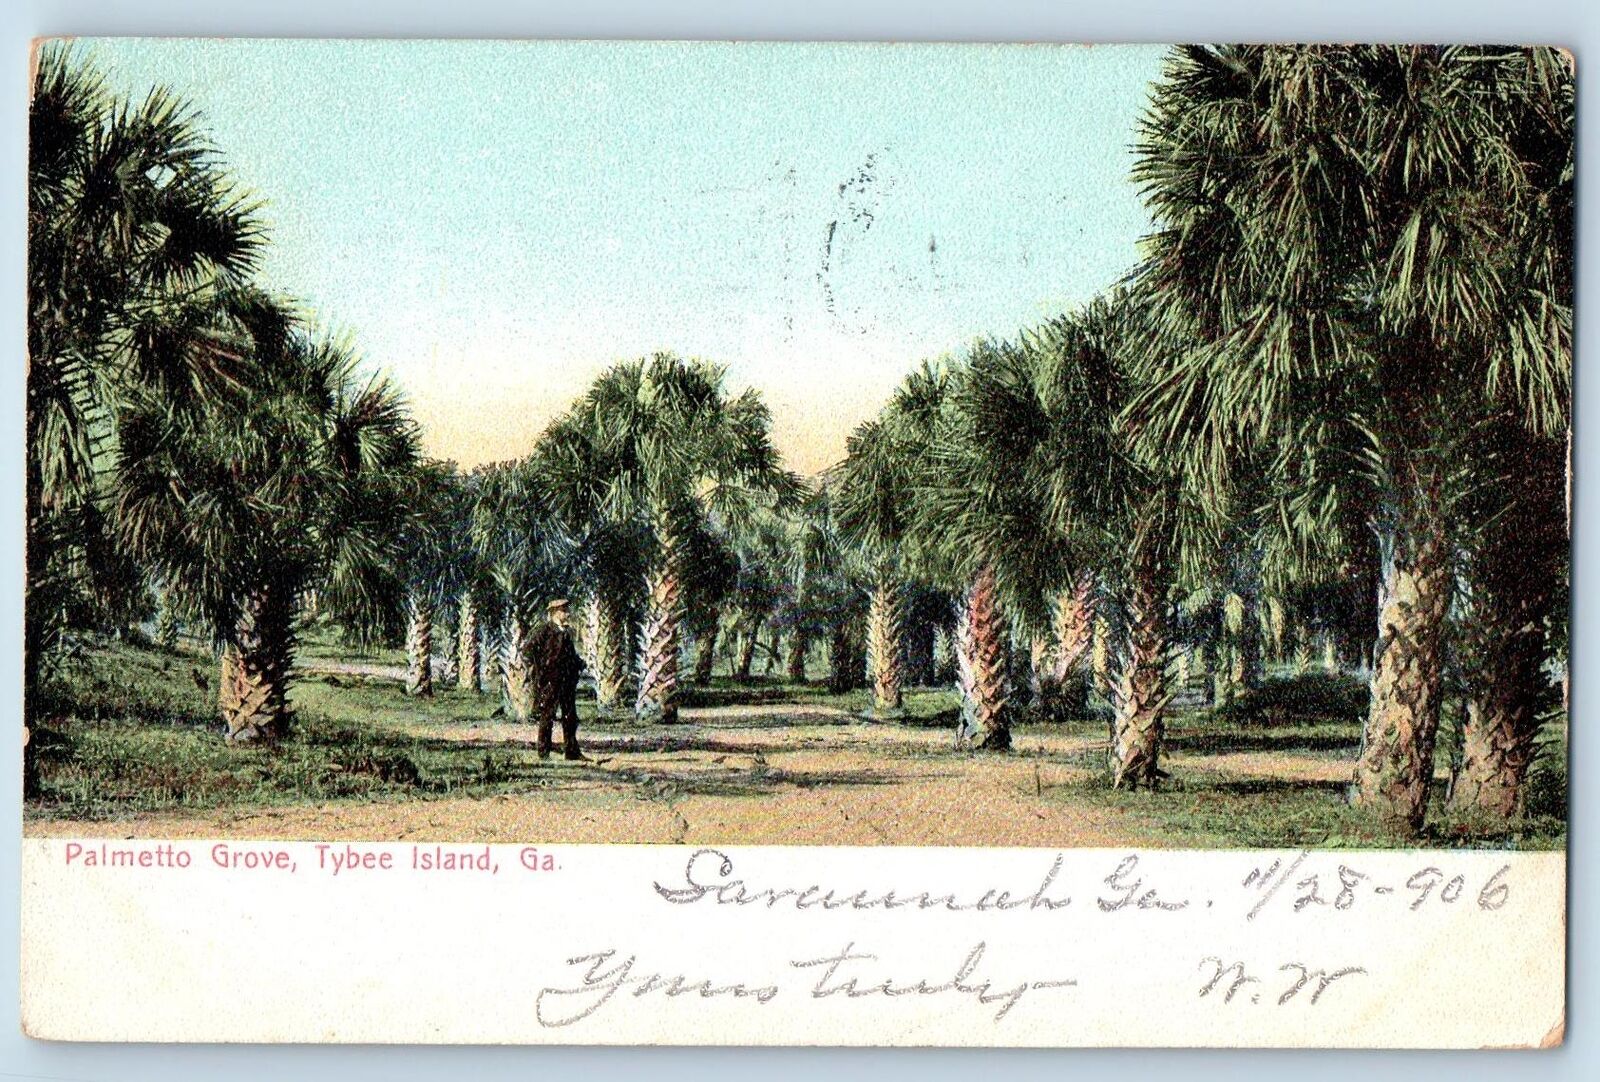 1906 Palmetto Grove Man On The Farm Overview Tybee Island Georgia GA Postcard